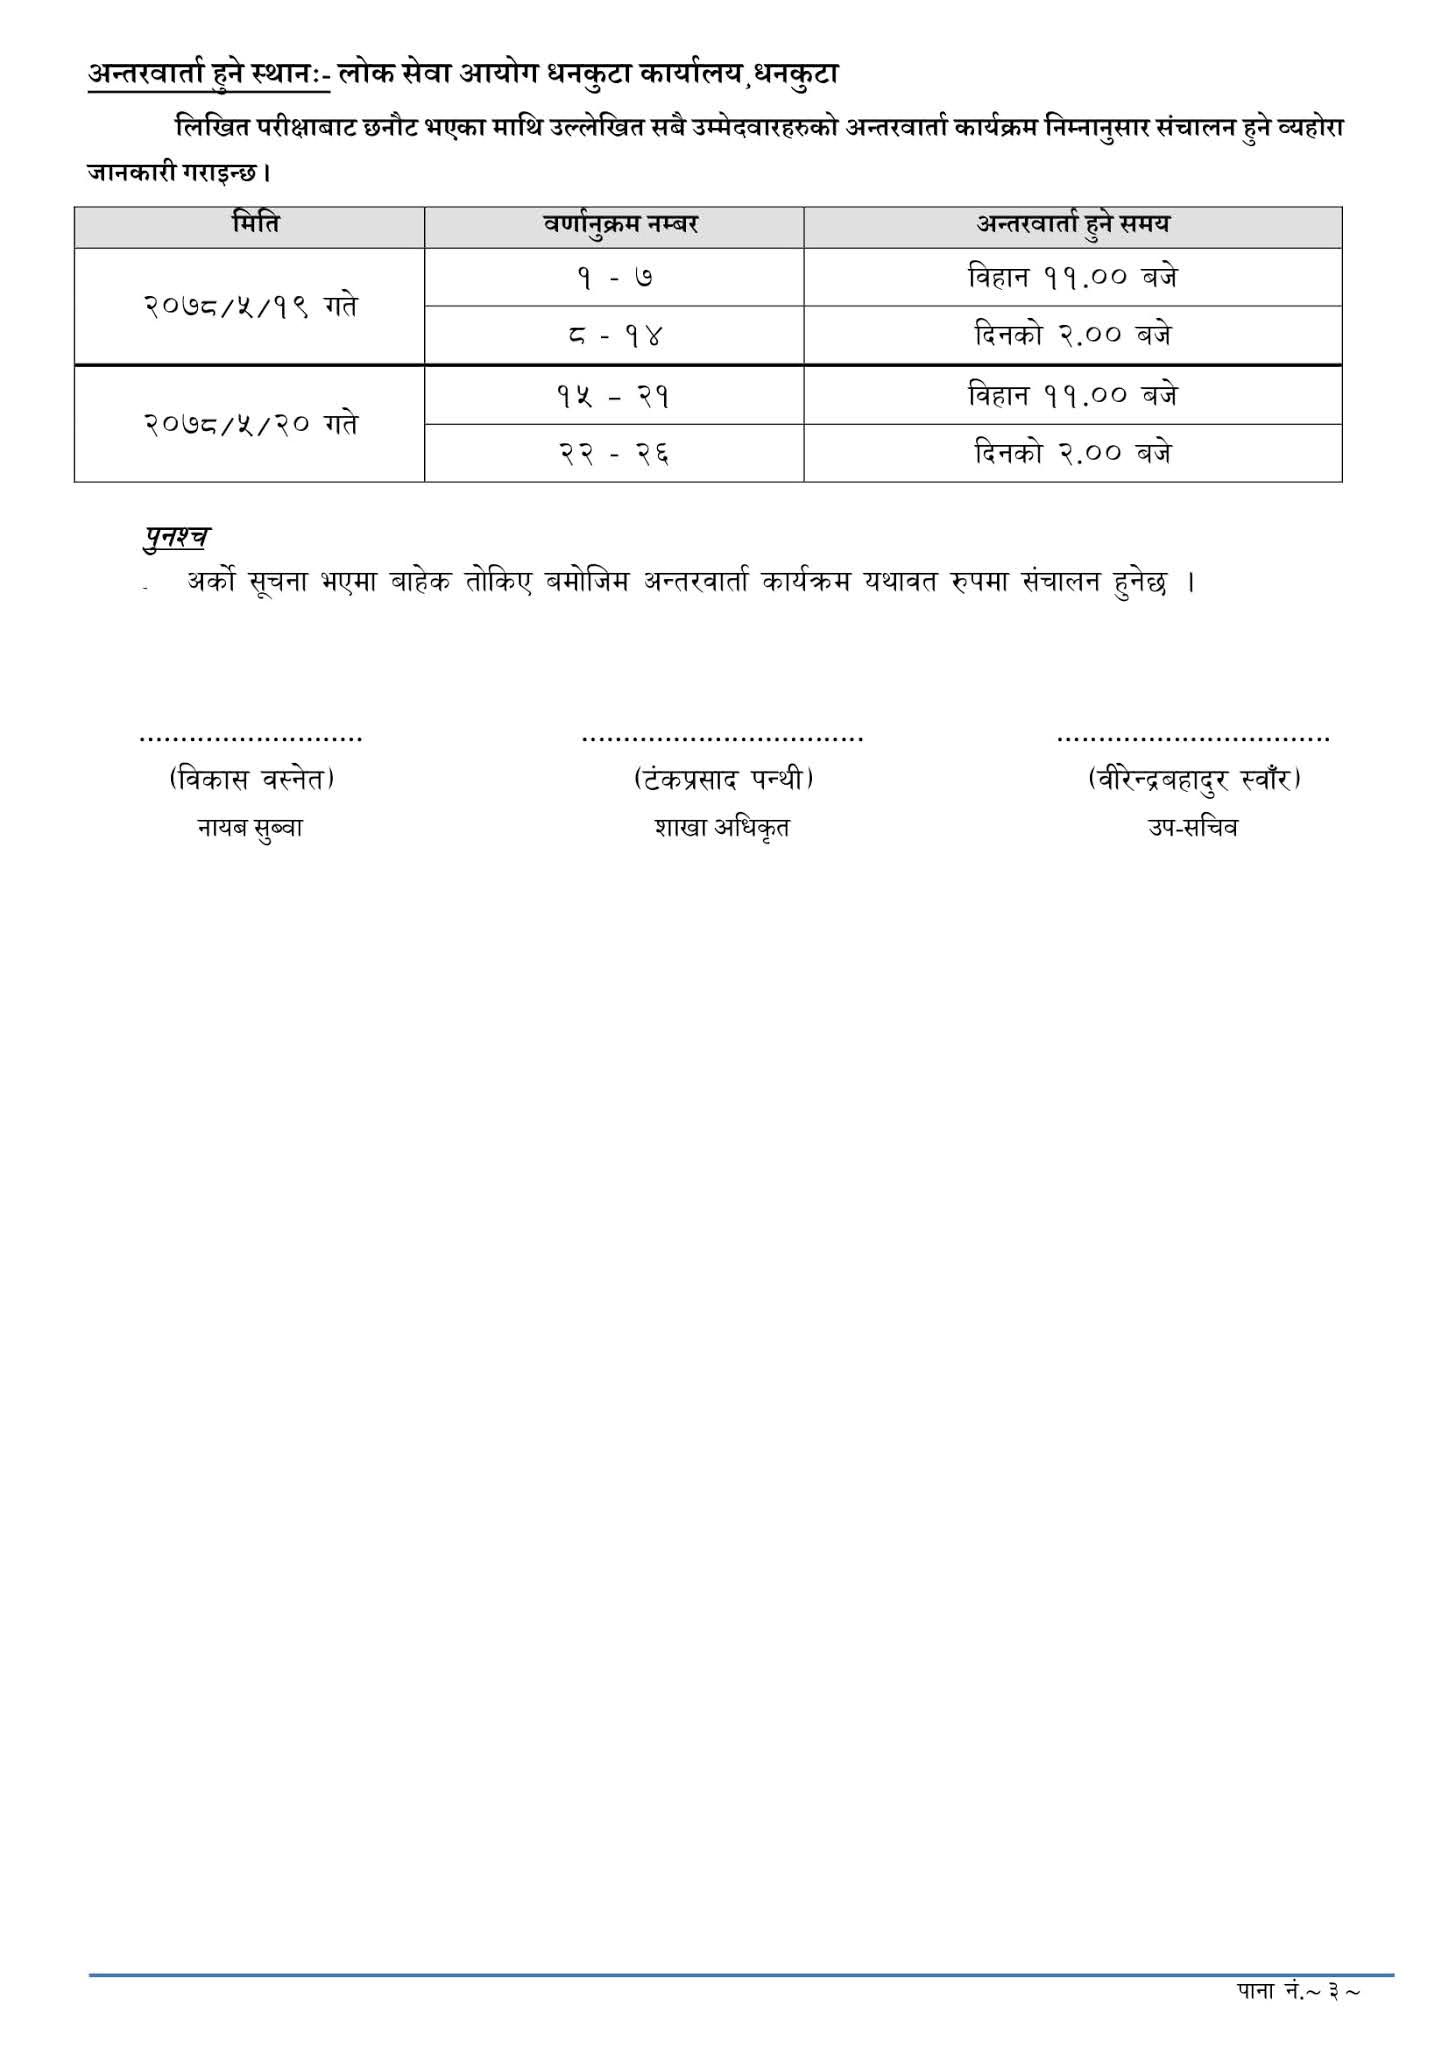 NASU Account - Dhankuta Lok Sewa Aayog Written Exam Result & Exam Schedule